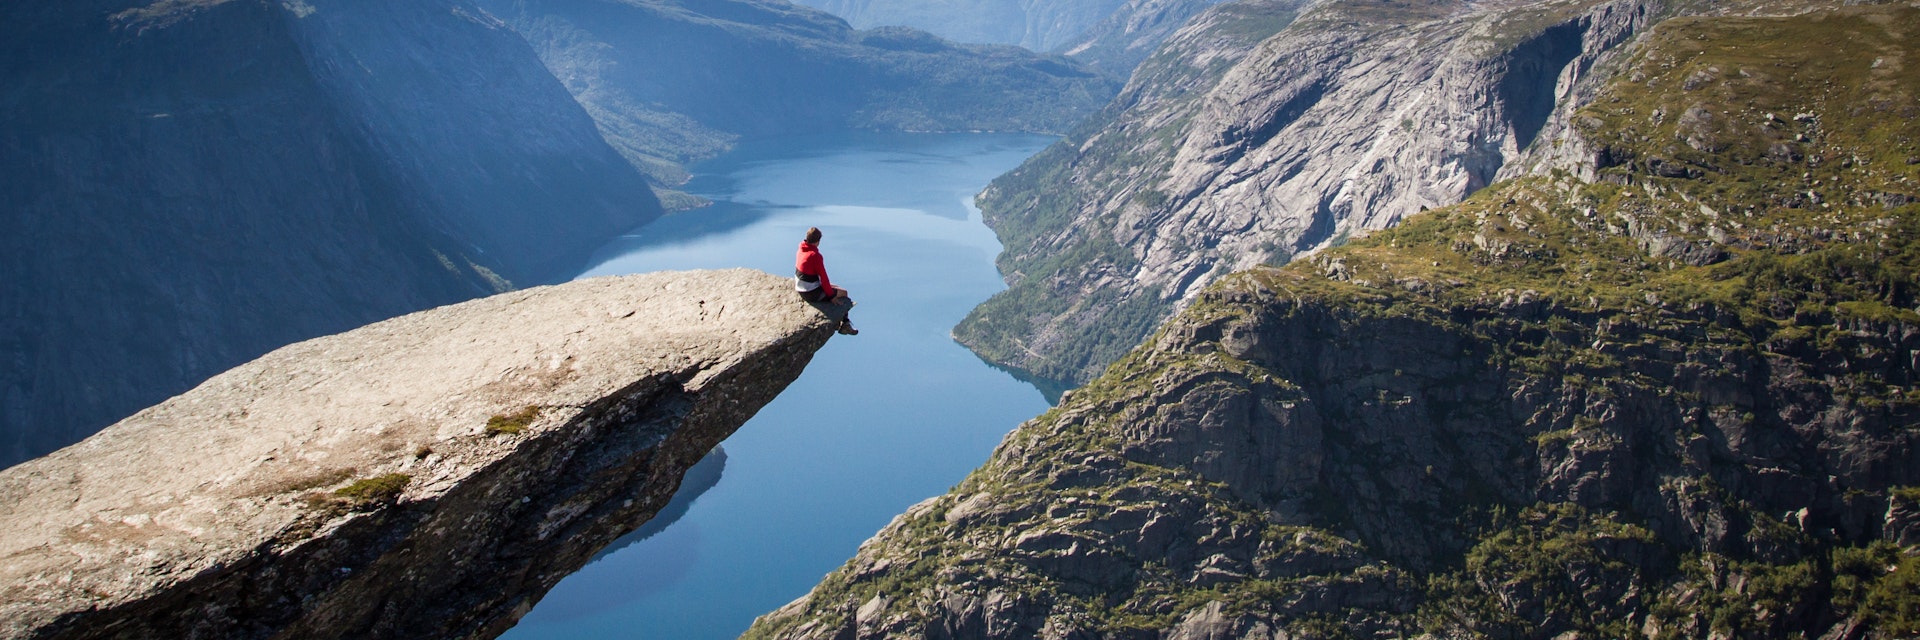 Sitting on Trolltunga rock overlooking the fjord.